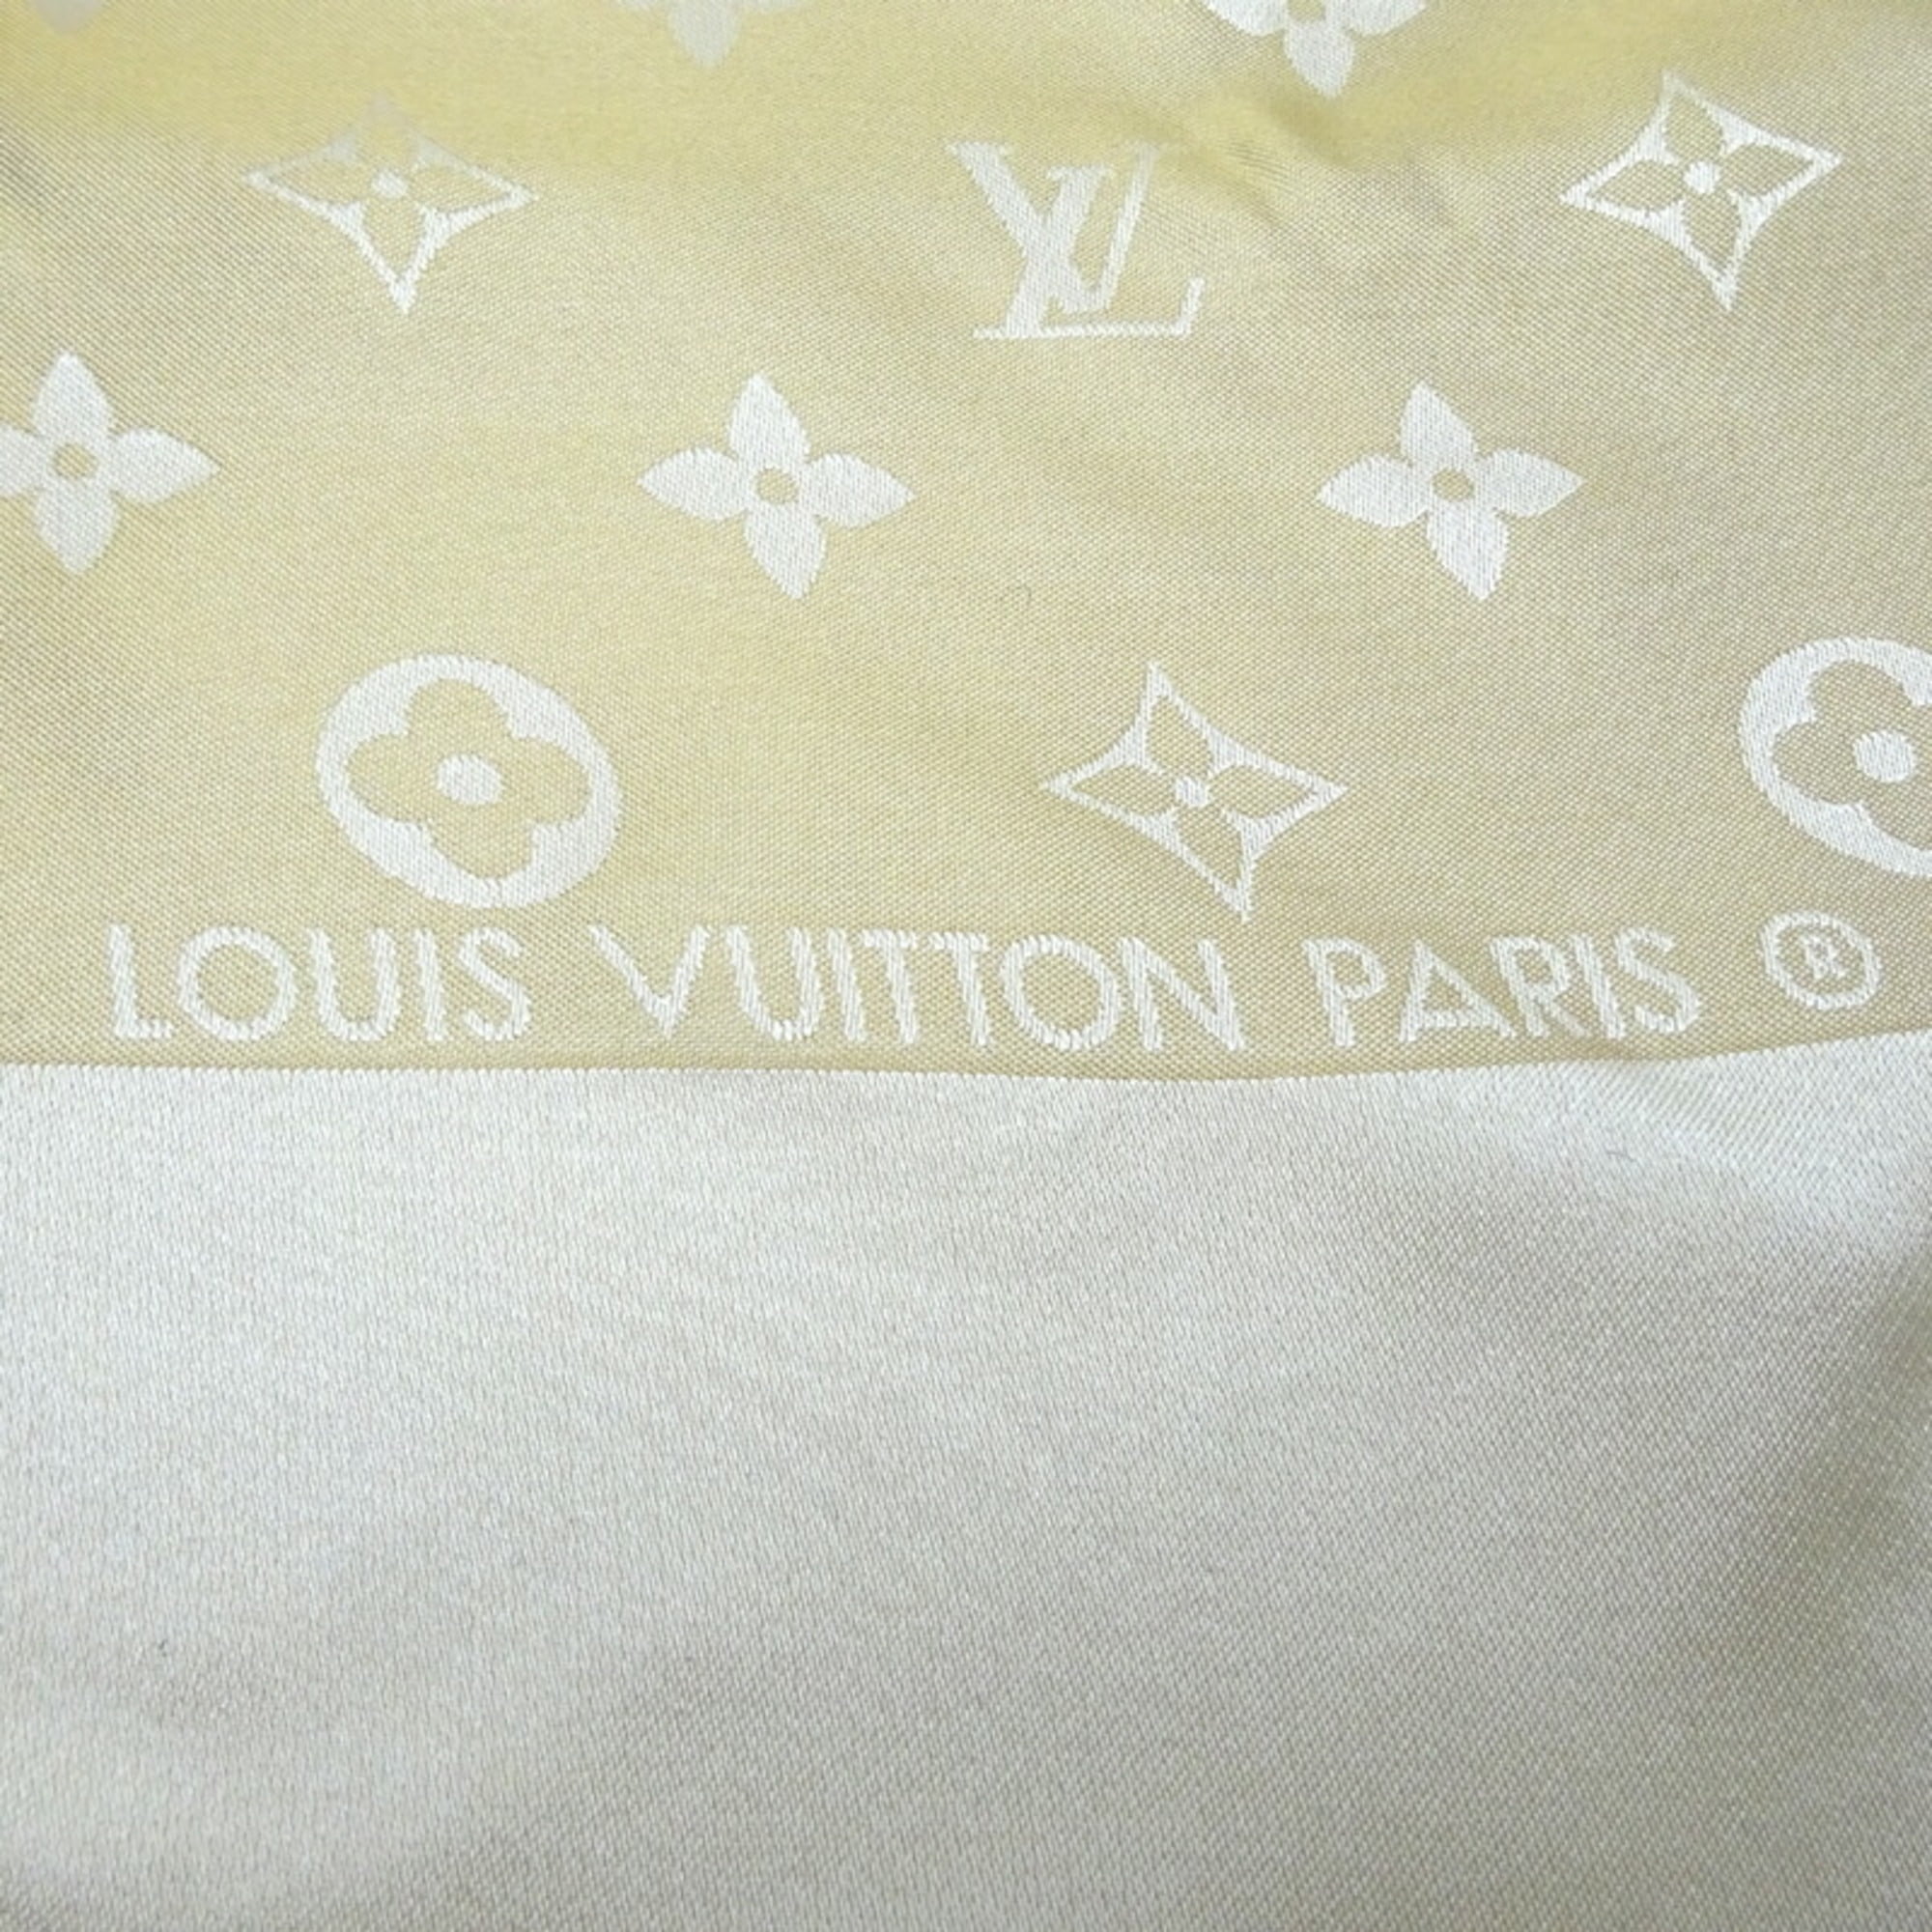 Wicked Thrift - Genuine Louis Vuitton muffler scarf. Find it in our online  store!   louis-vuitton-muffler-scarf